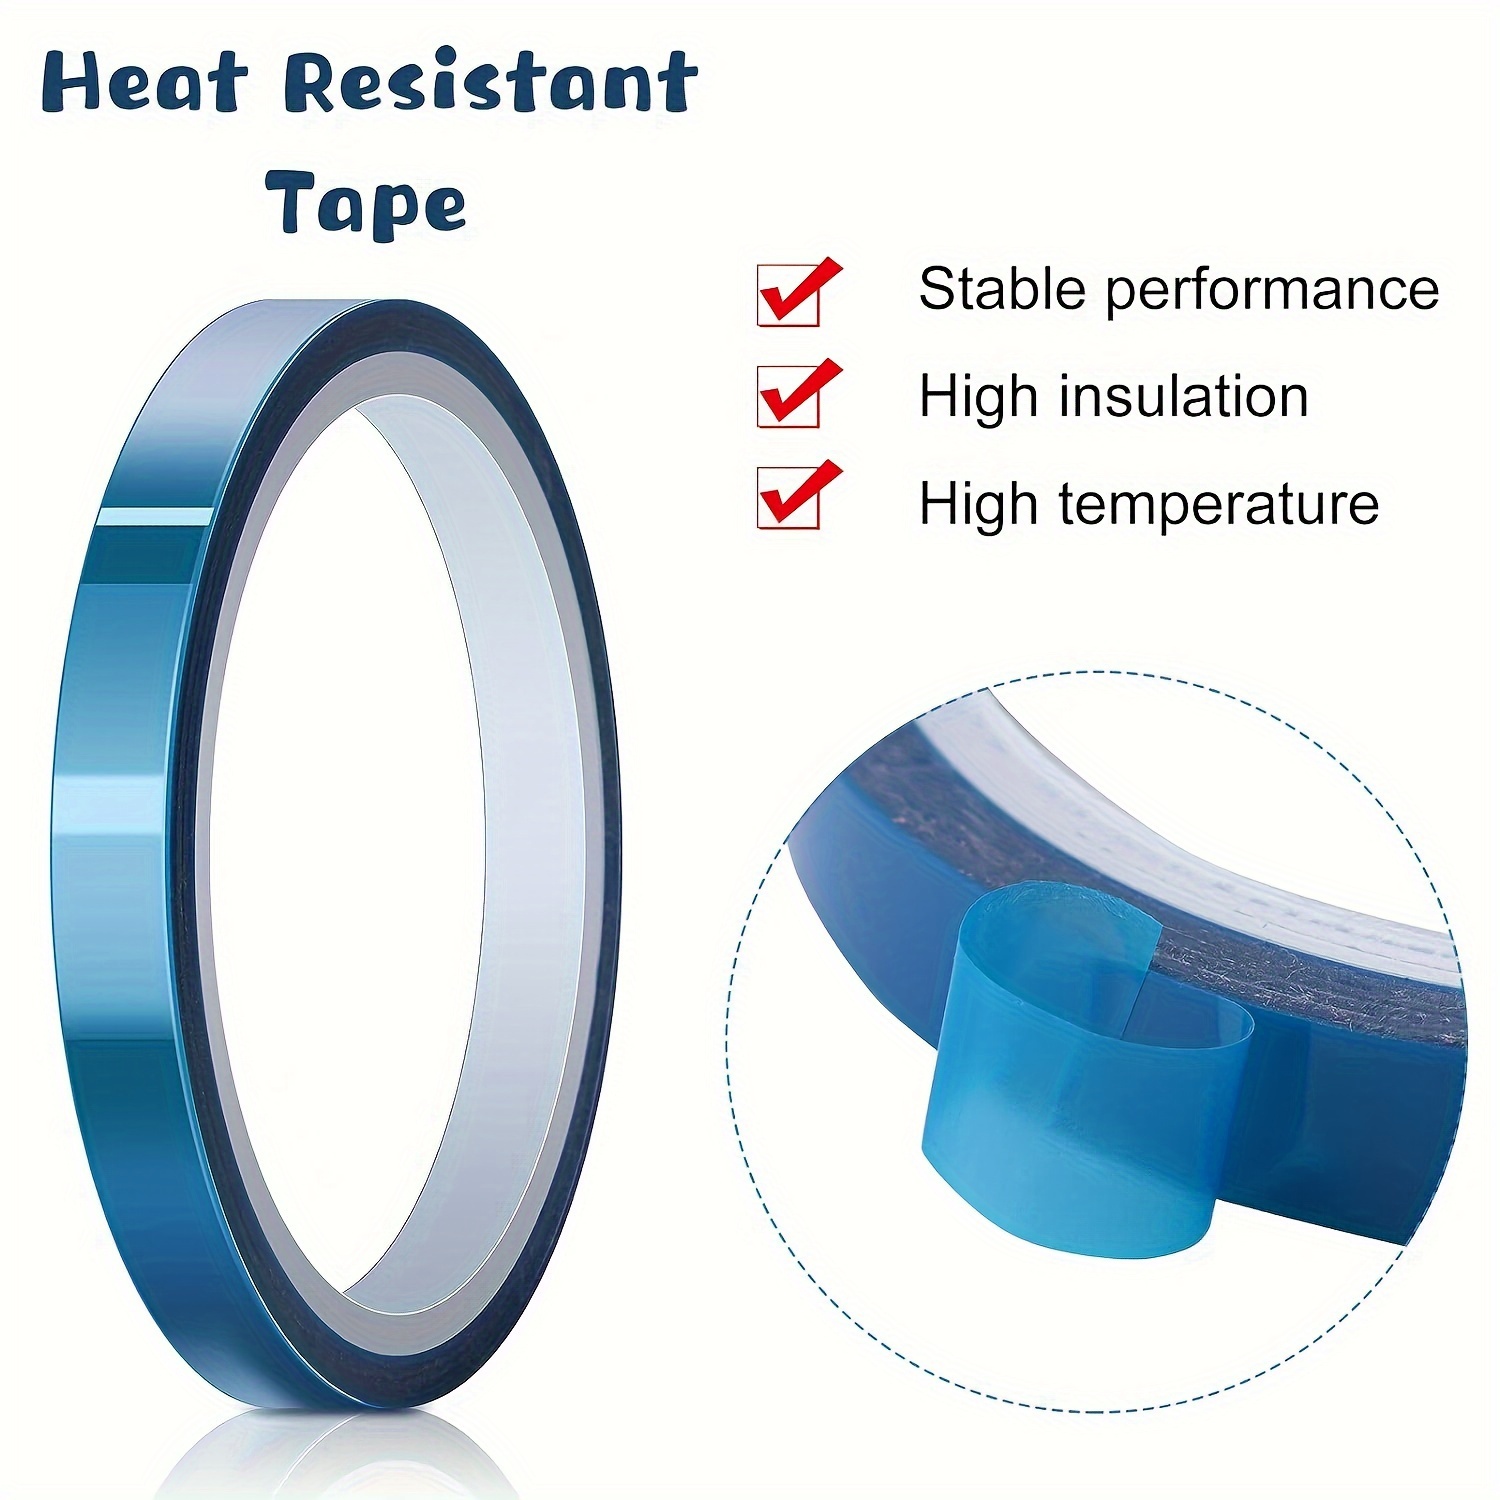 Heat-Resistant Tape